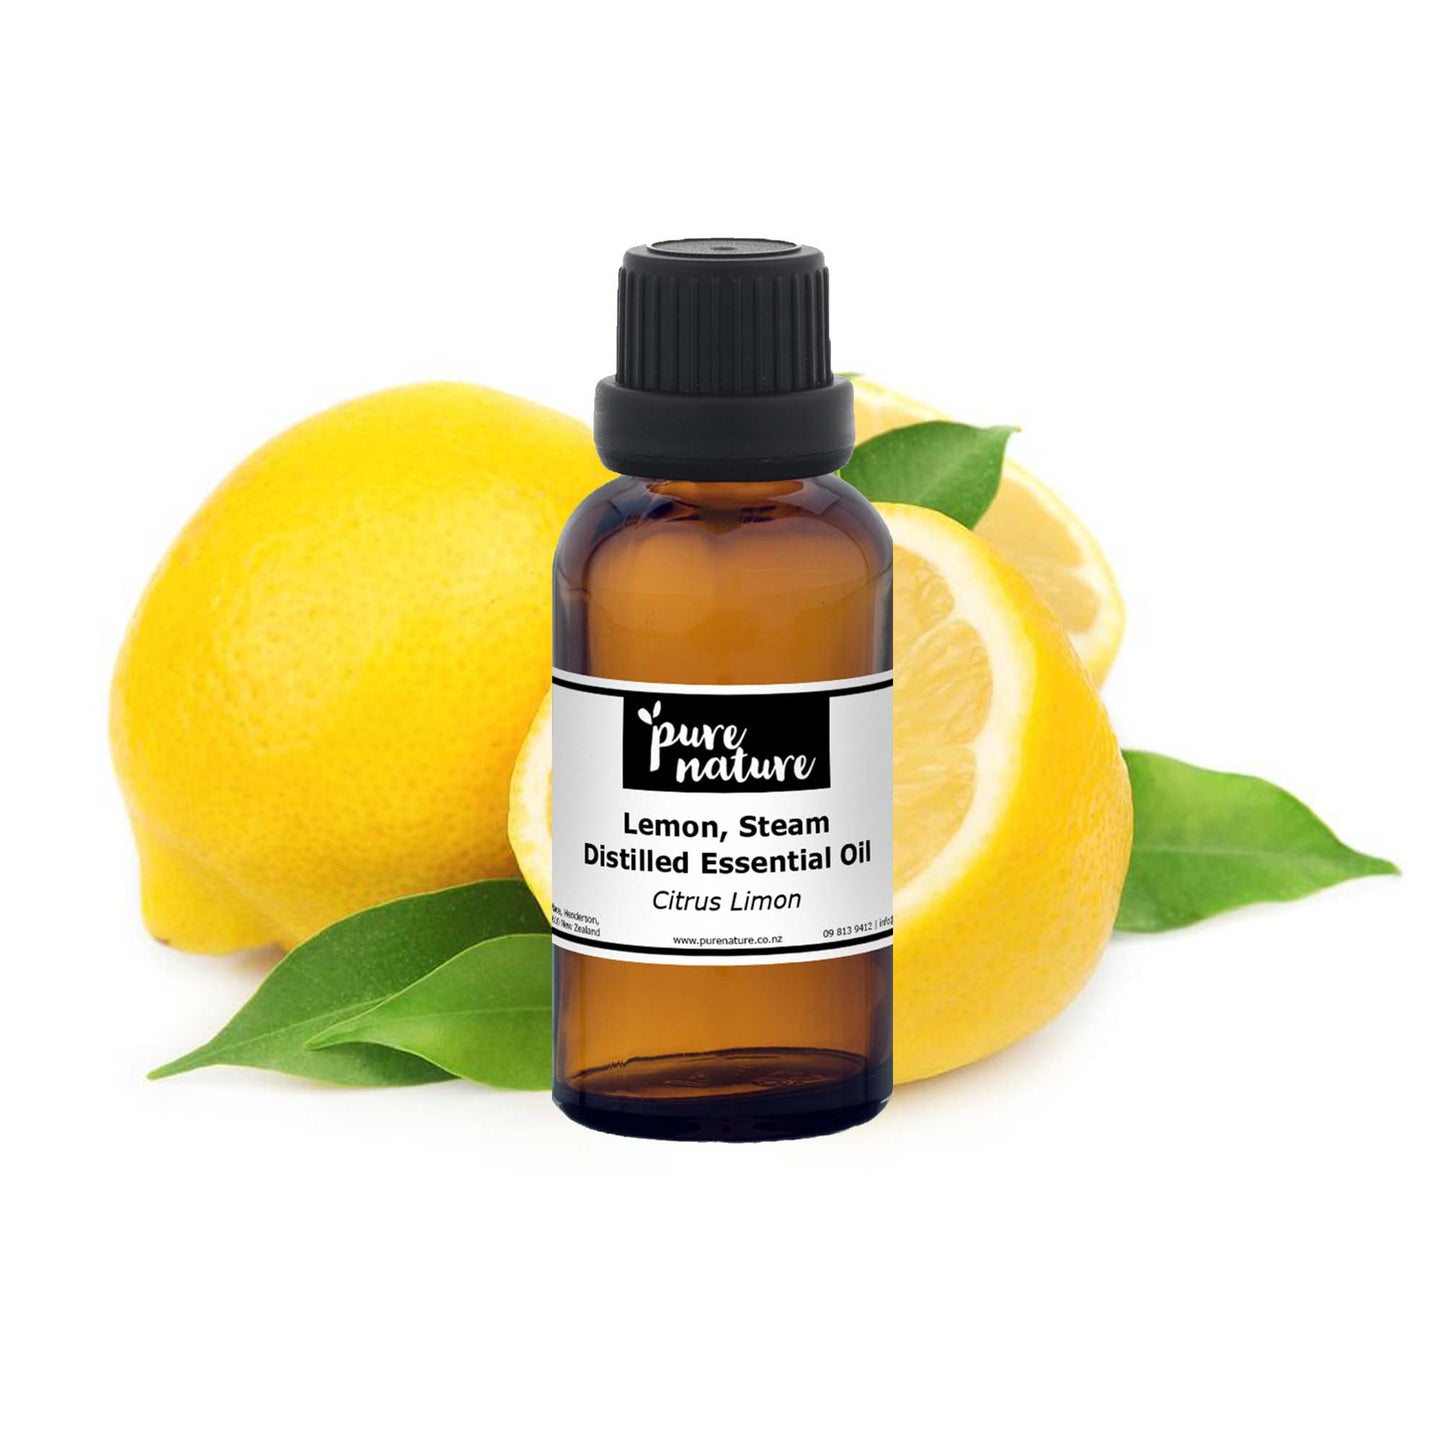 Lemon, Steam Distilled Essential Oil